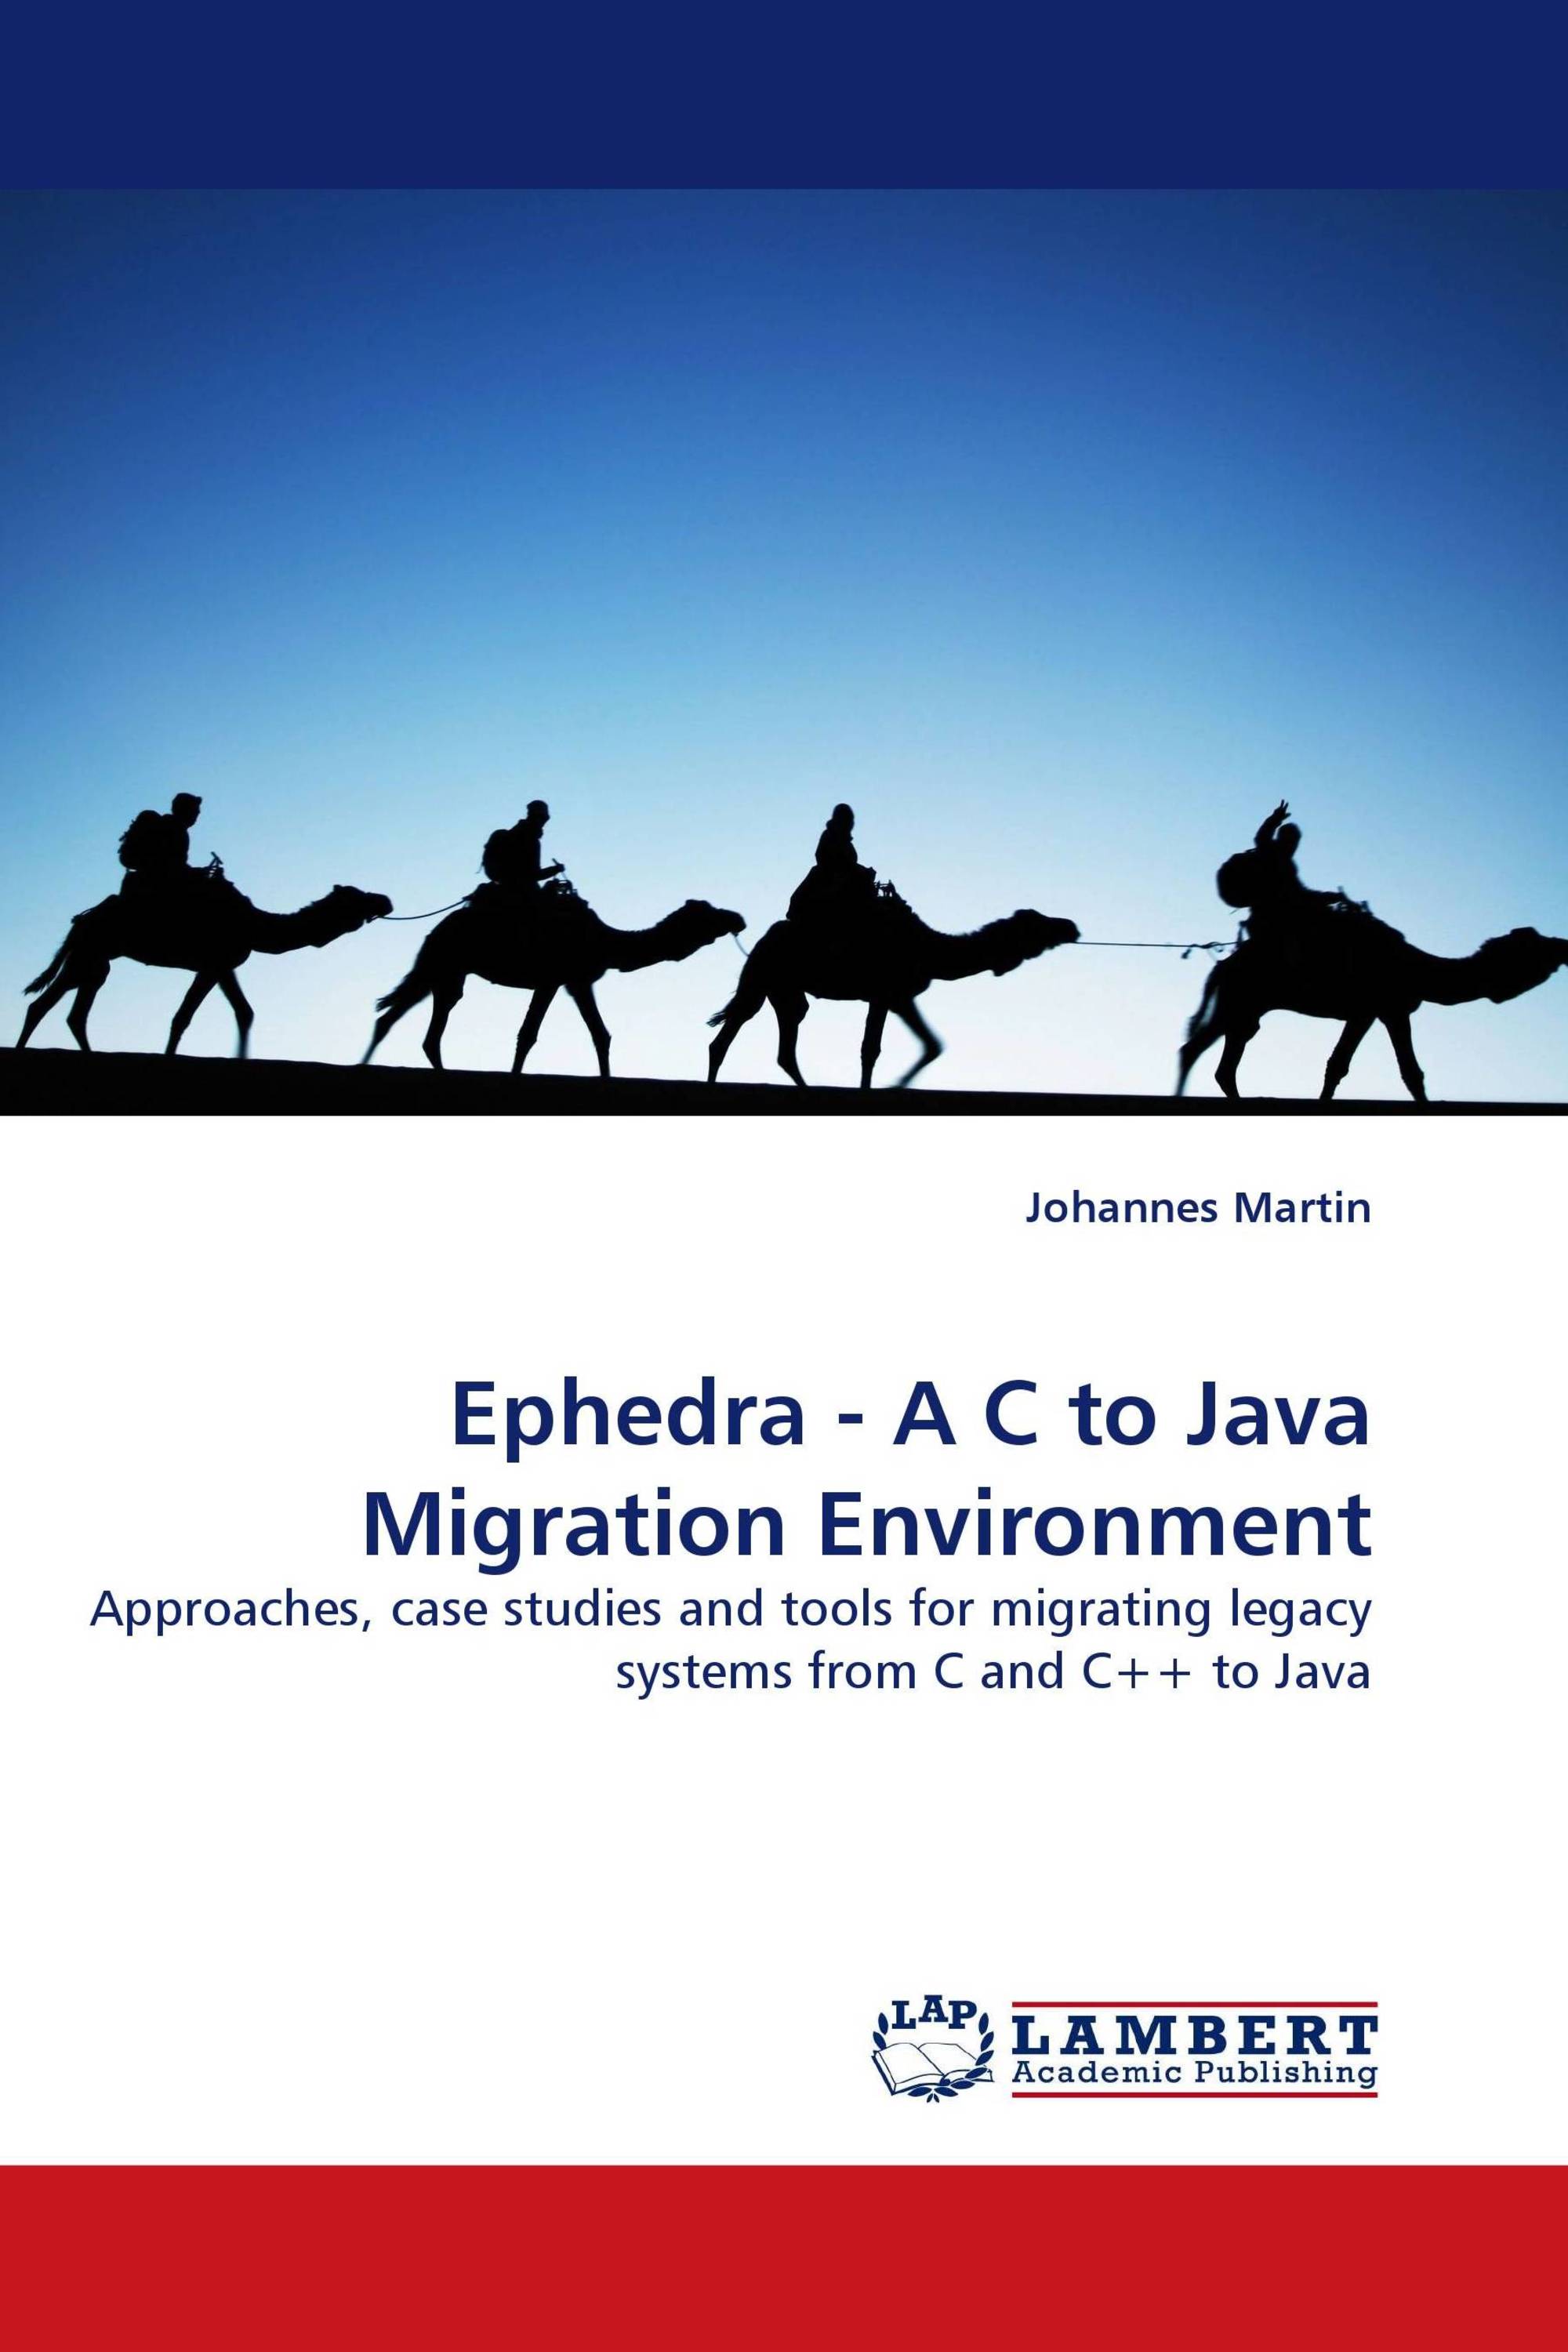 Ephedra - A C to Java Migration Environment